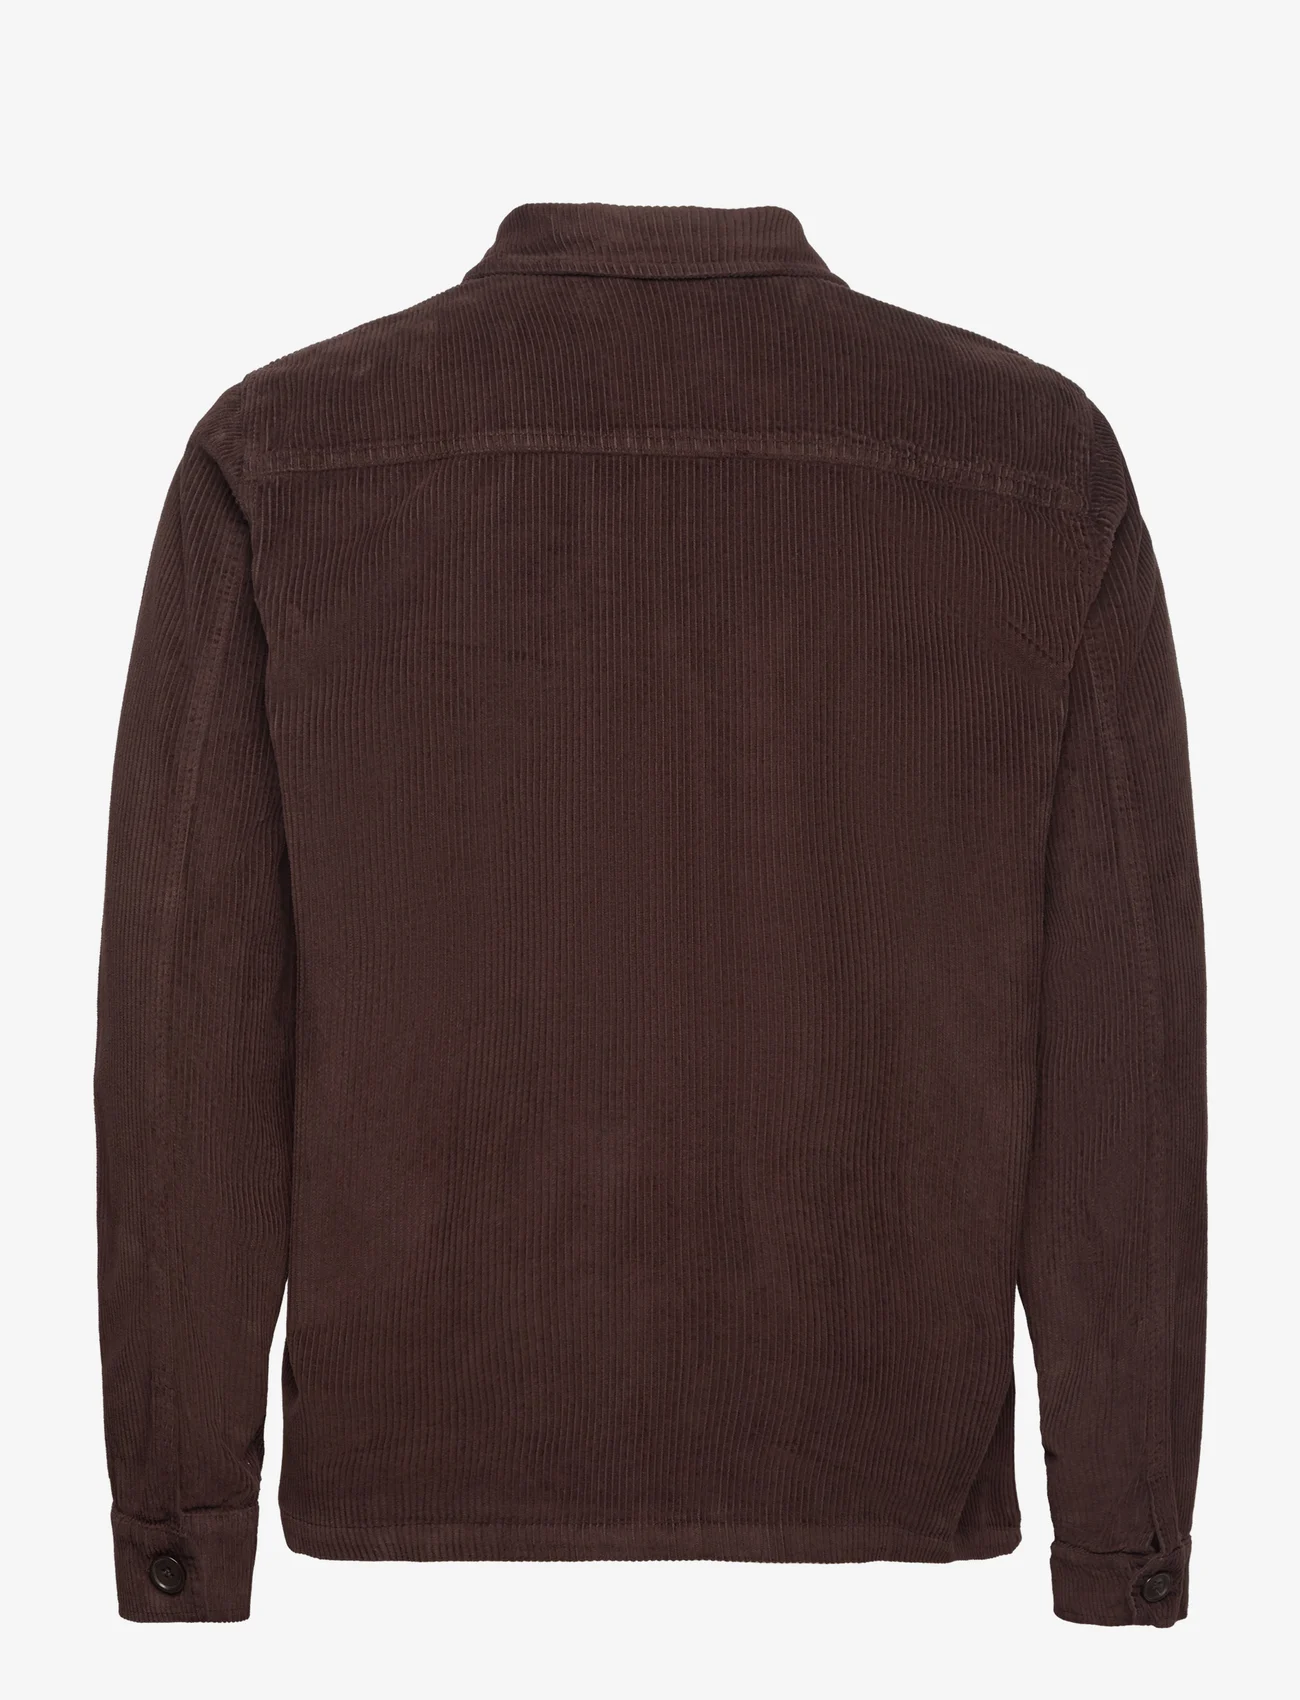 By Garment Makers - Matt Corduroy Jacket GOTS - 3000 ebony brown - 1